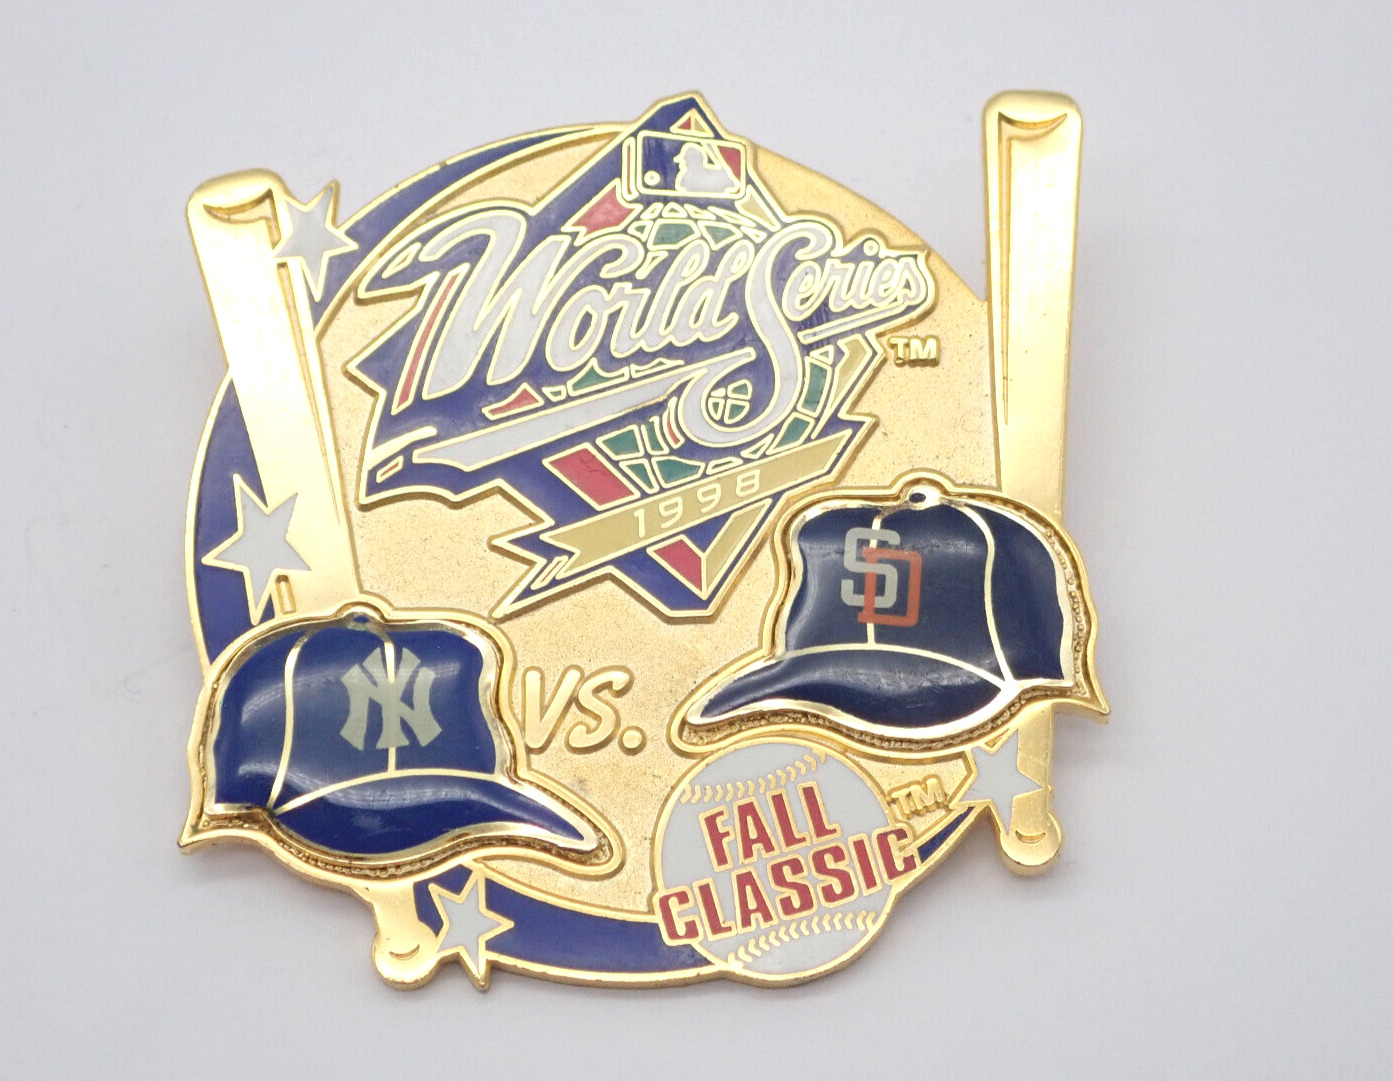 World Series 1998 NY Yankees Vs. San Diego Fall Classic Vintage Lapel Pin